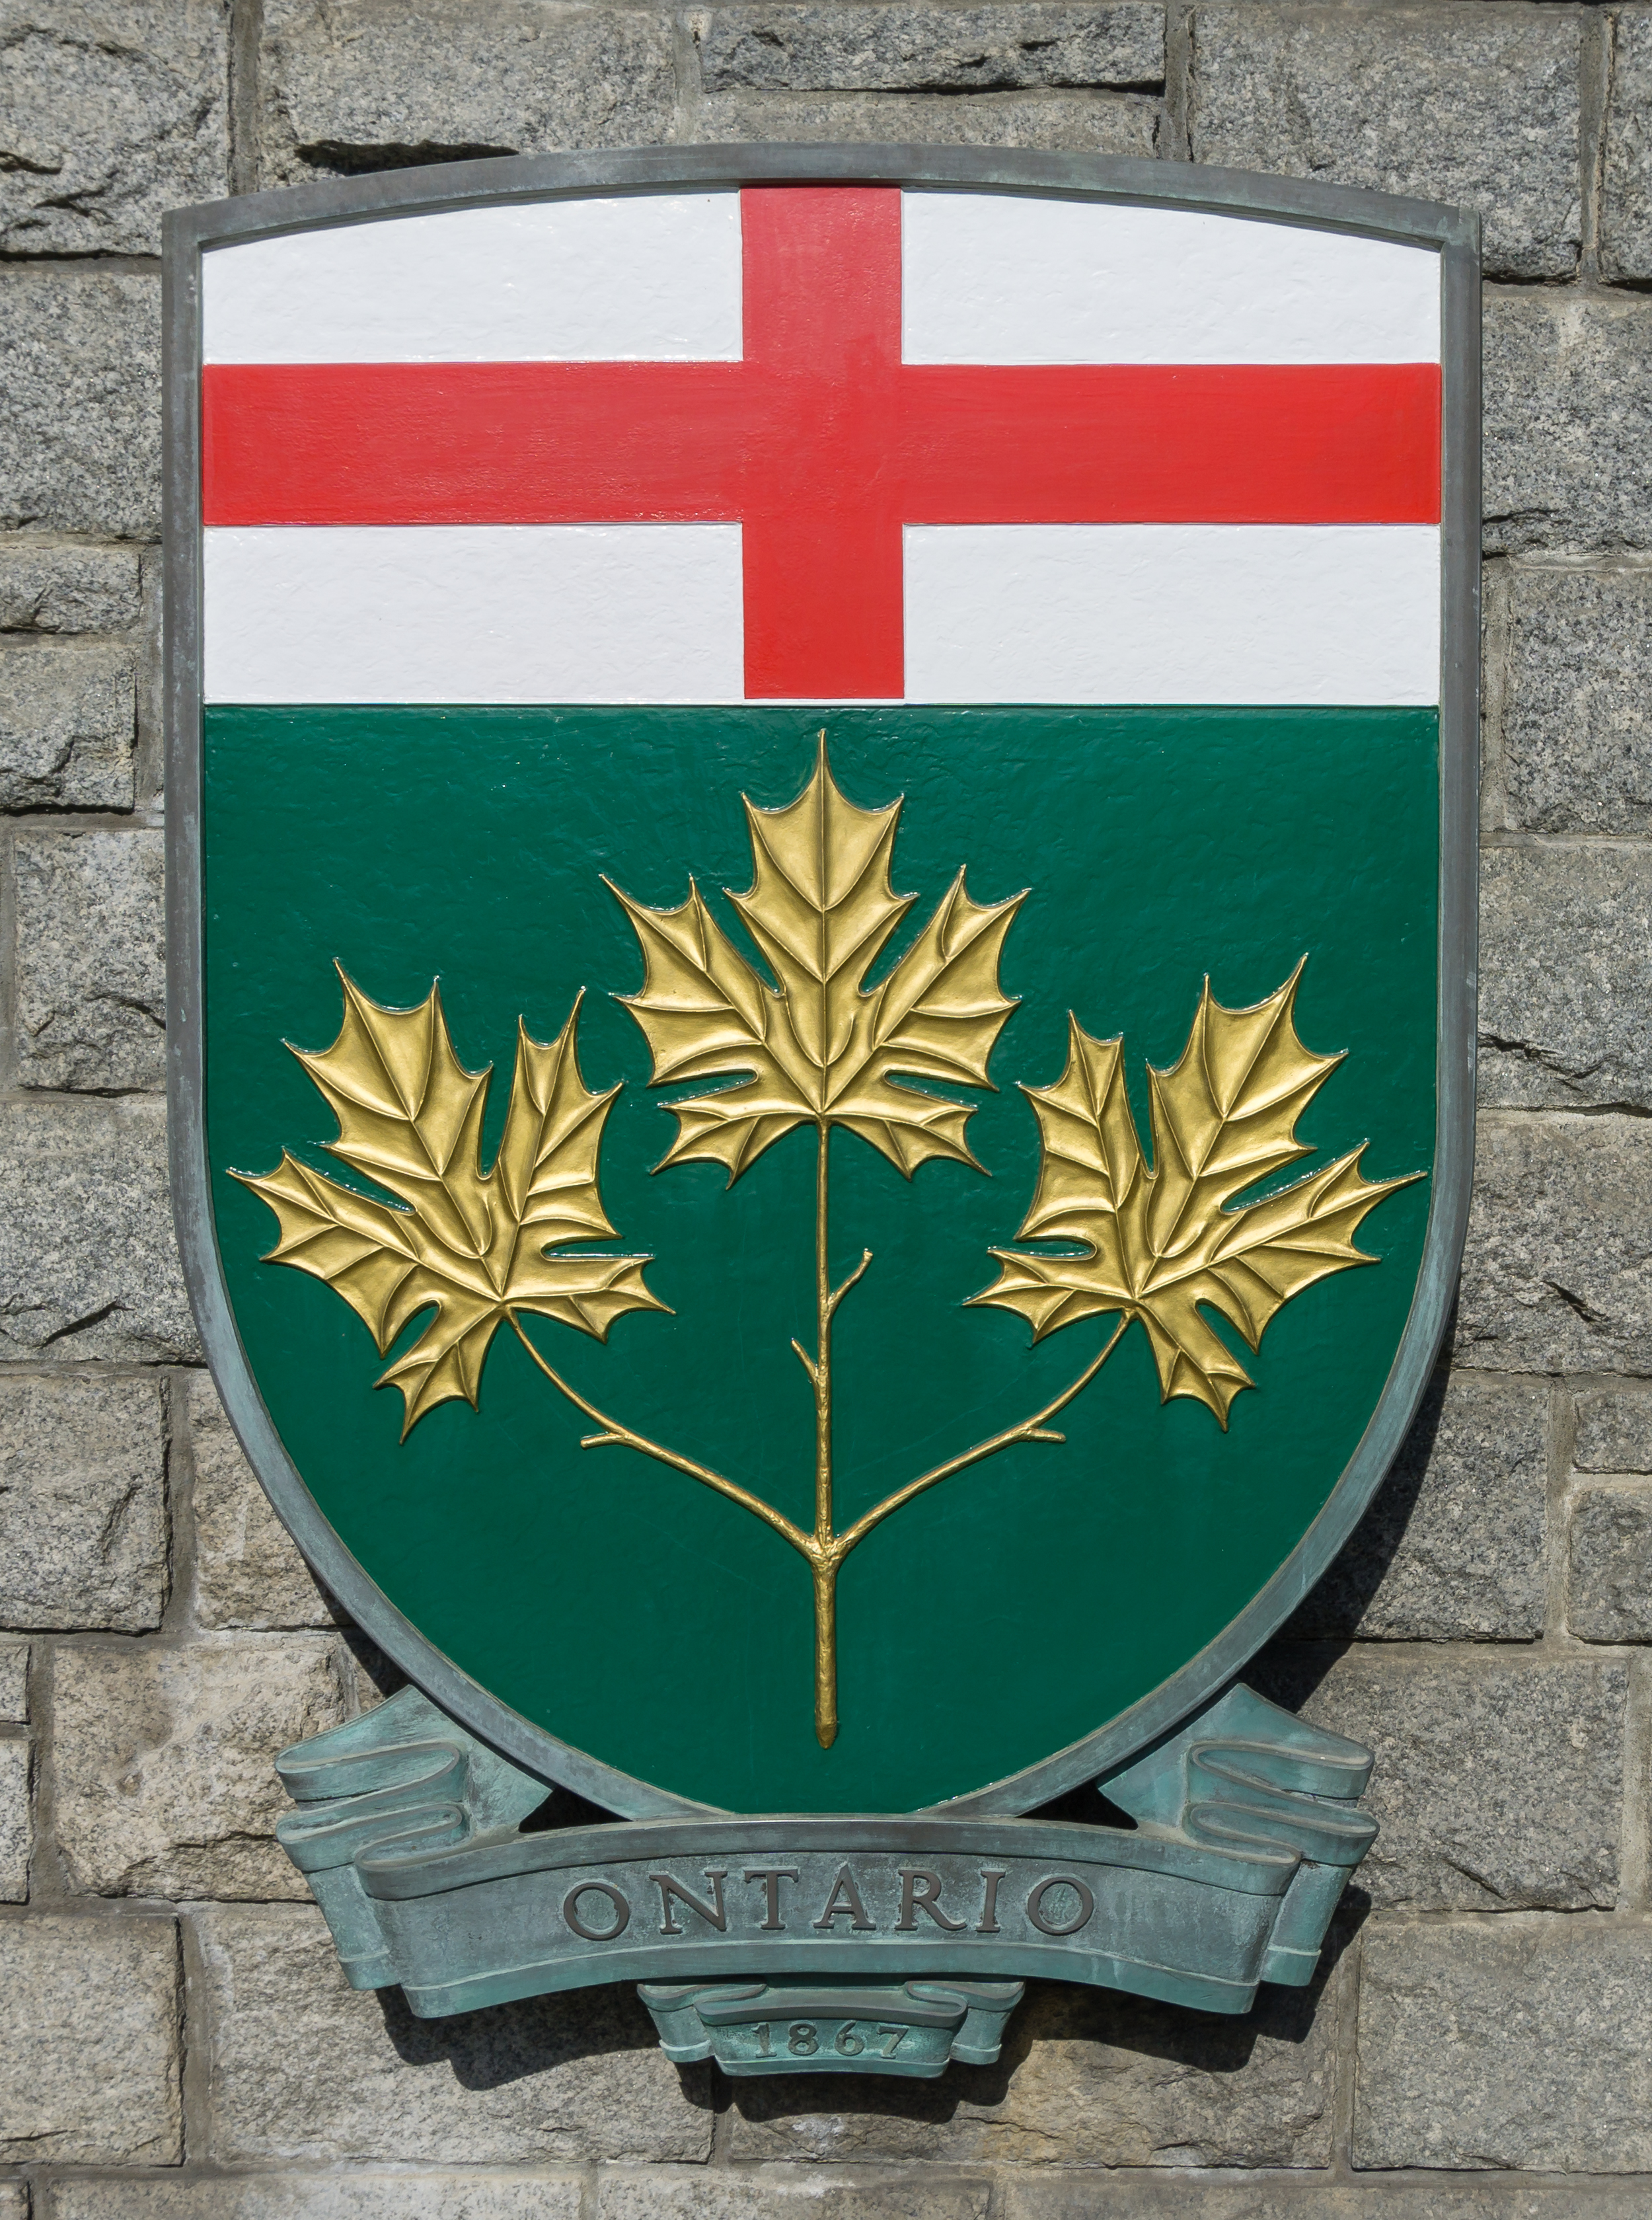 Coats of arms of Ontario, Confederation Garden Court, Victoria, British Columbia, Canada 18